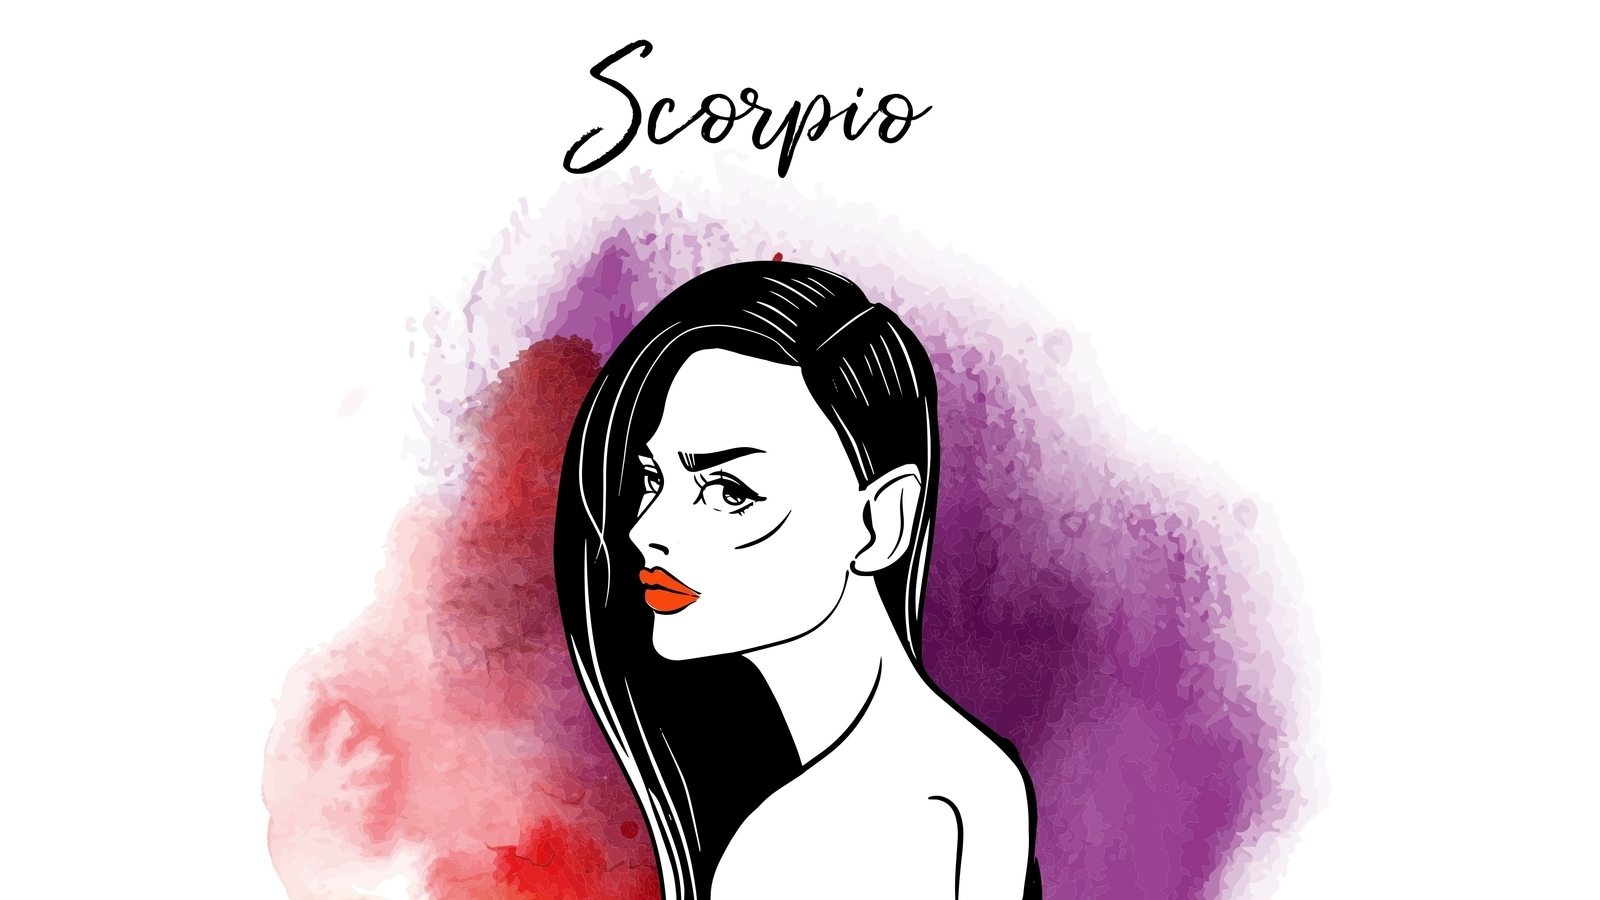 Scorpio Daily Horoscope for February 28: Keep doing the good things ...